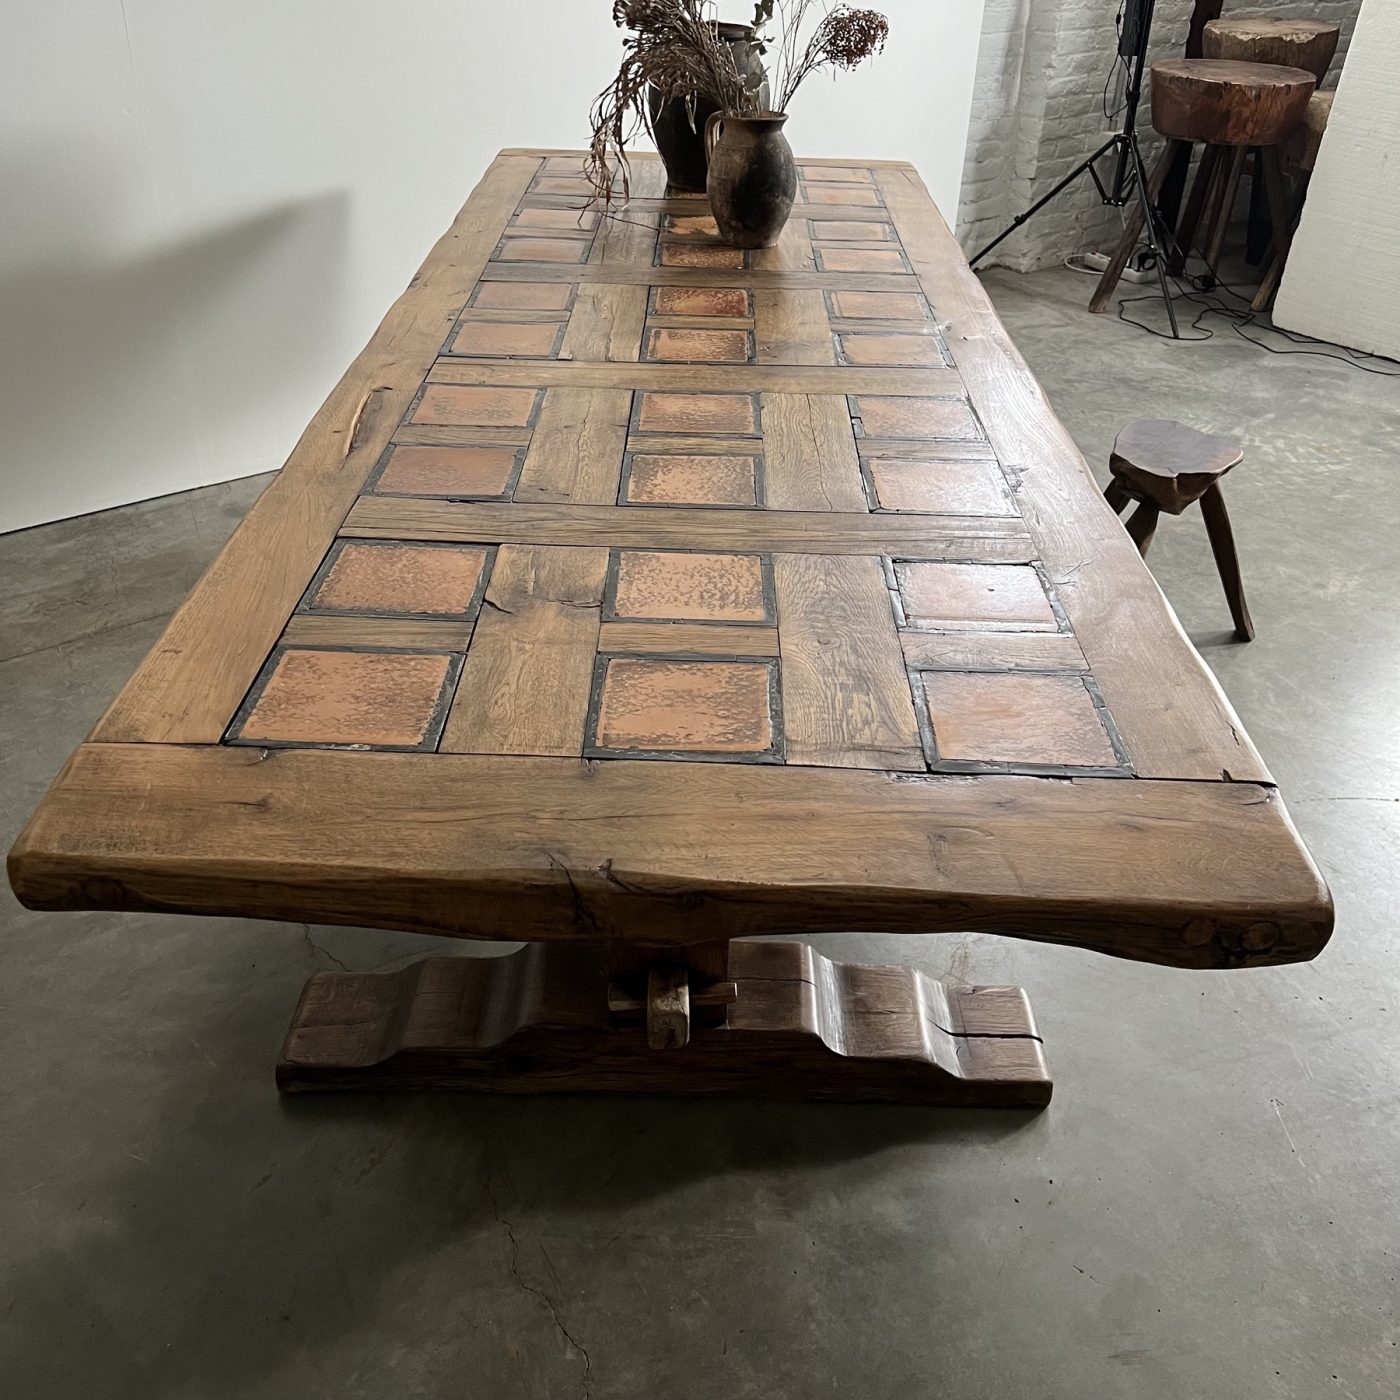 objet-vagabond-massive-table0001